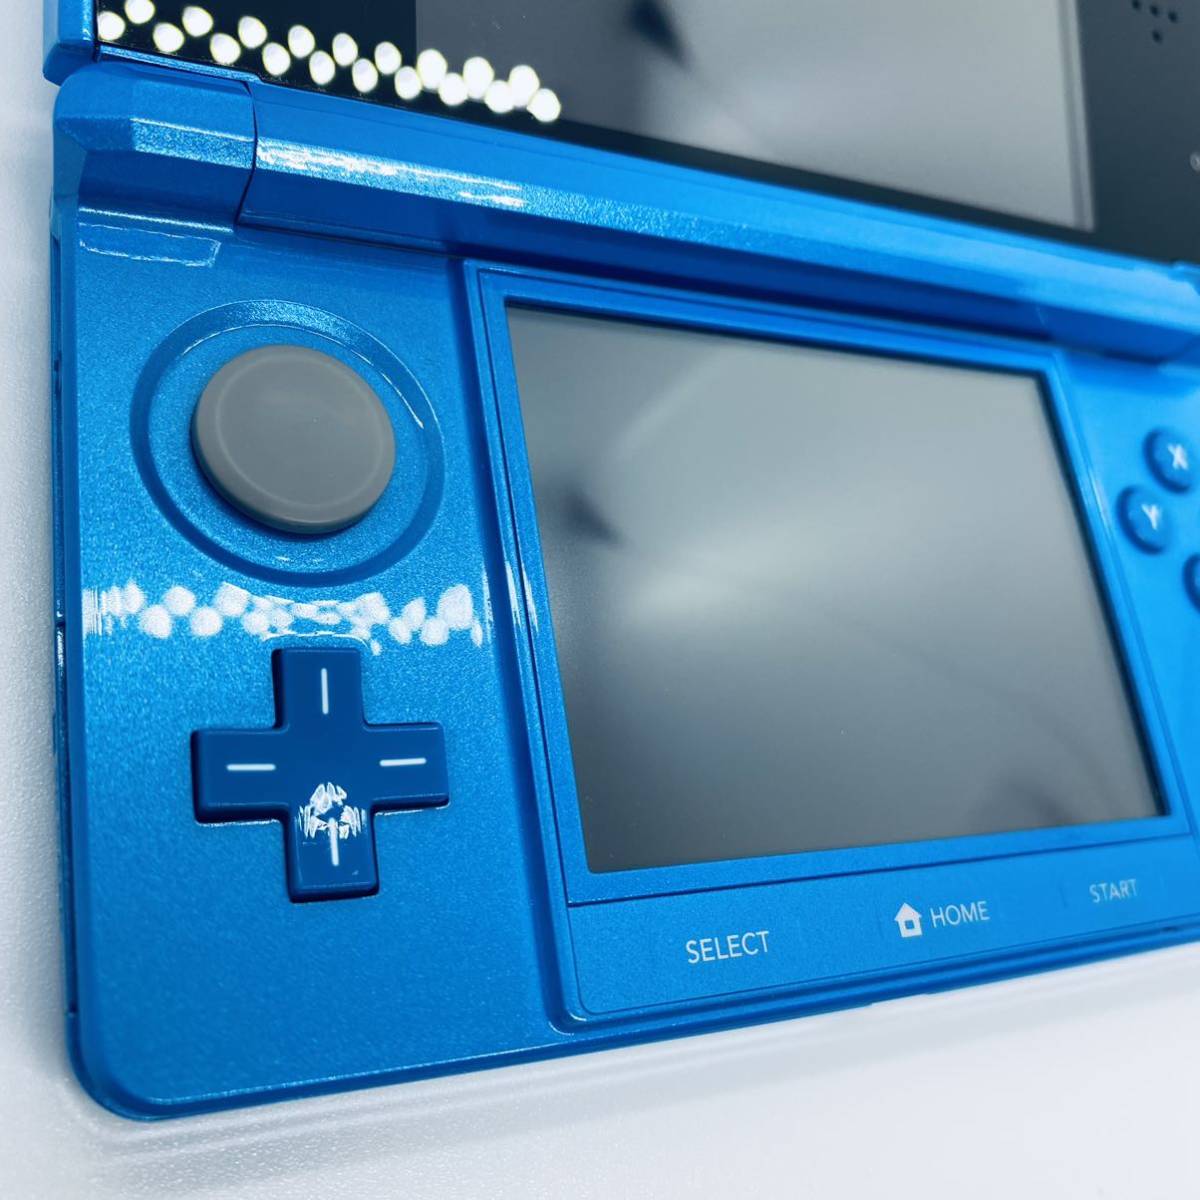 Nintendo 3DS本体のみ ライトブルー 本体のみ ニンテンドー3DS 動作品 美品に近い CTR-001